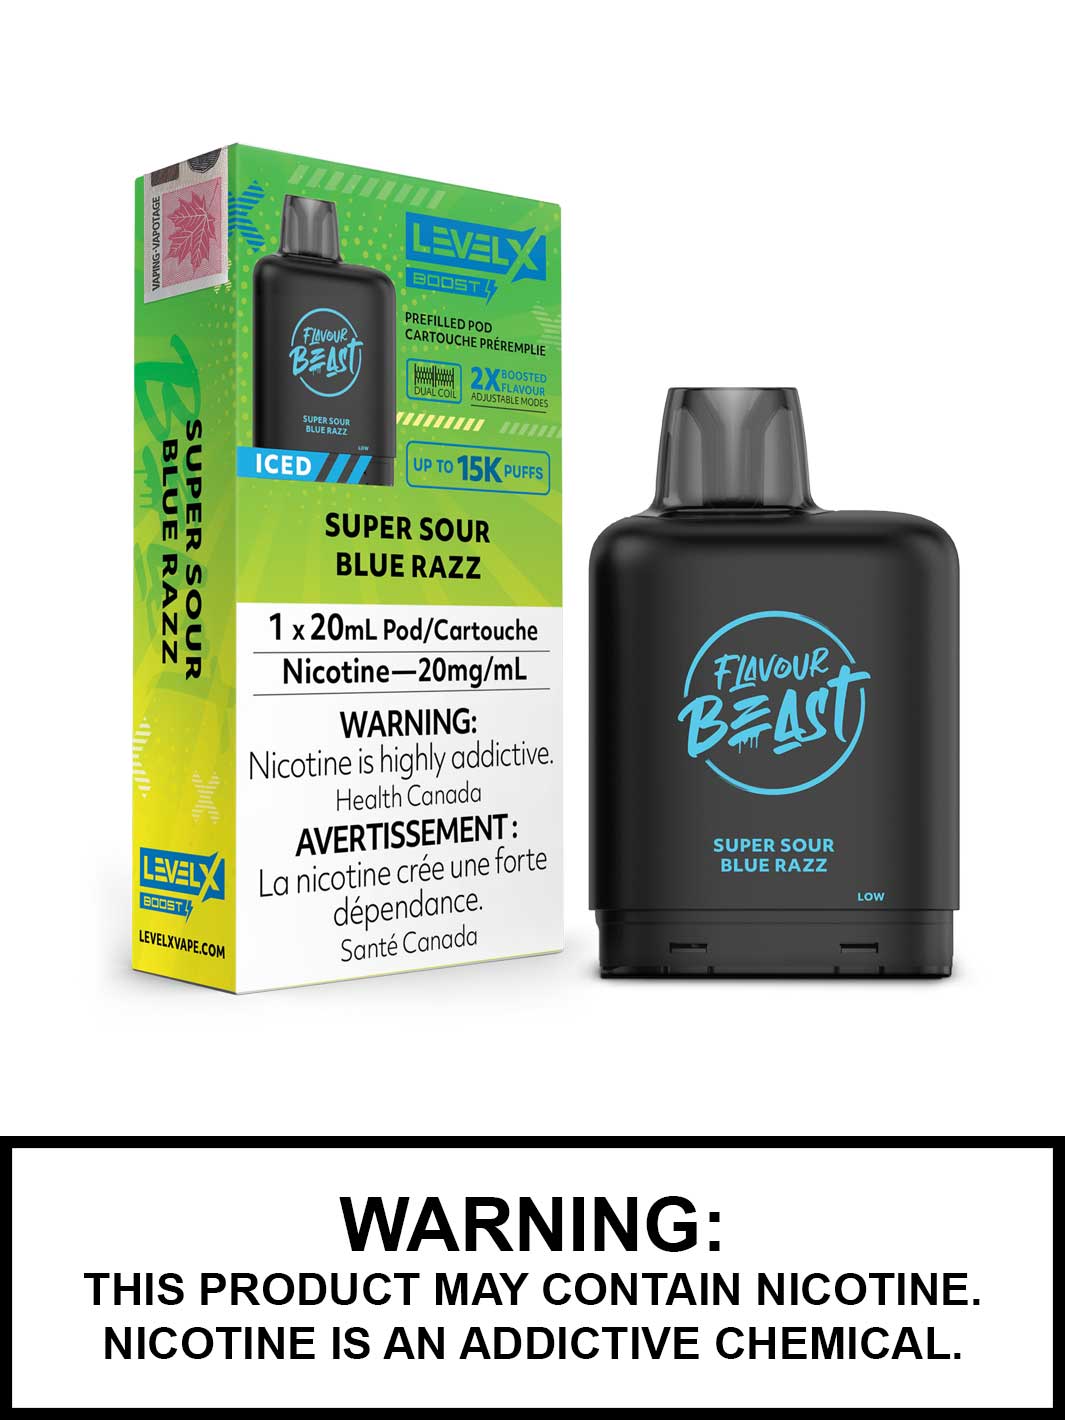 Super Sour Blue Razz Iced Flavour Beast Level X Boost Pods, Level X Vape, Vape360 Canada